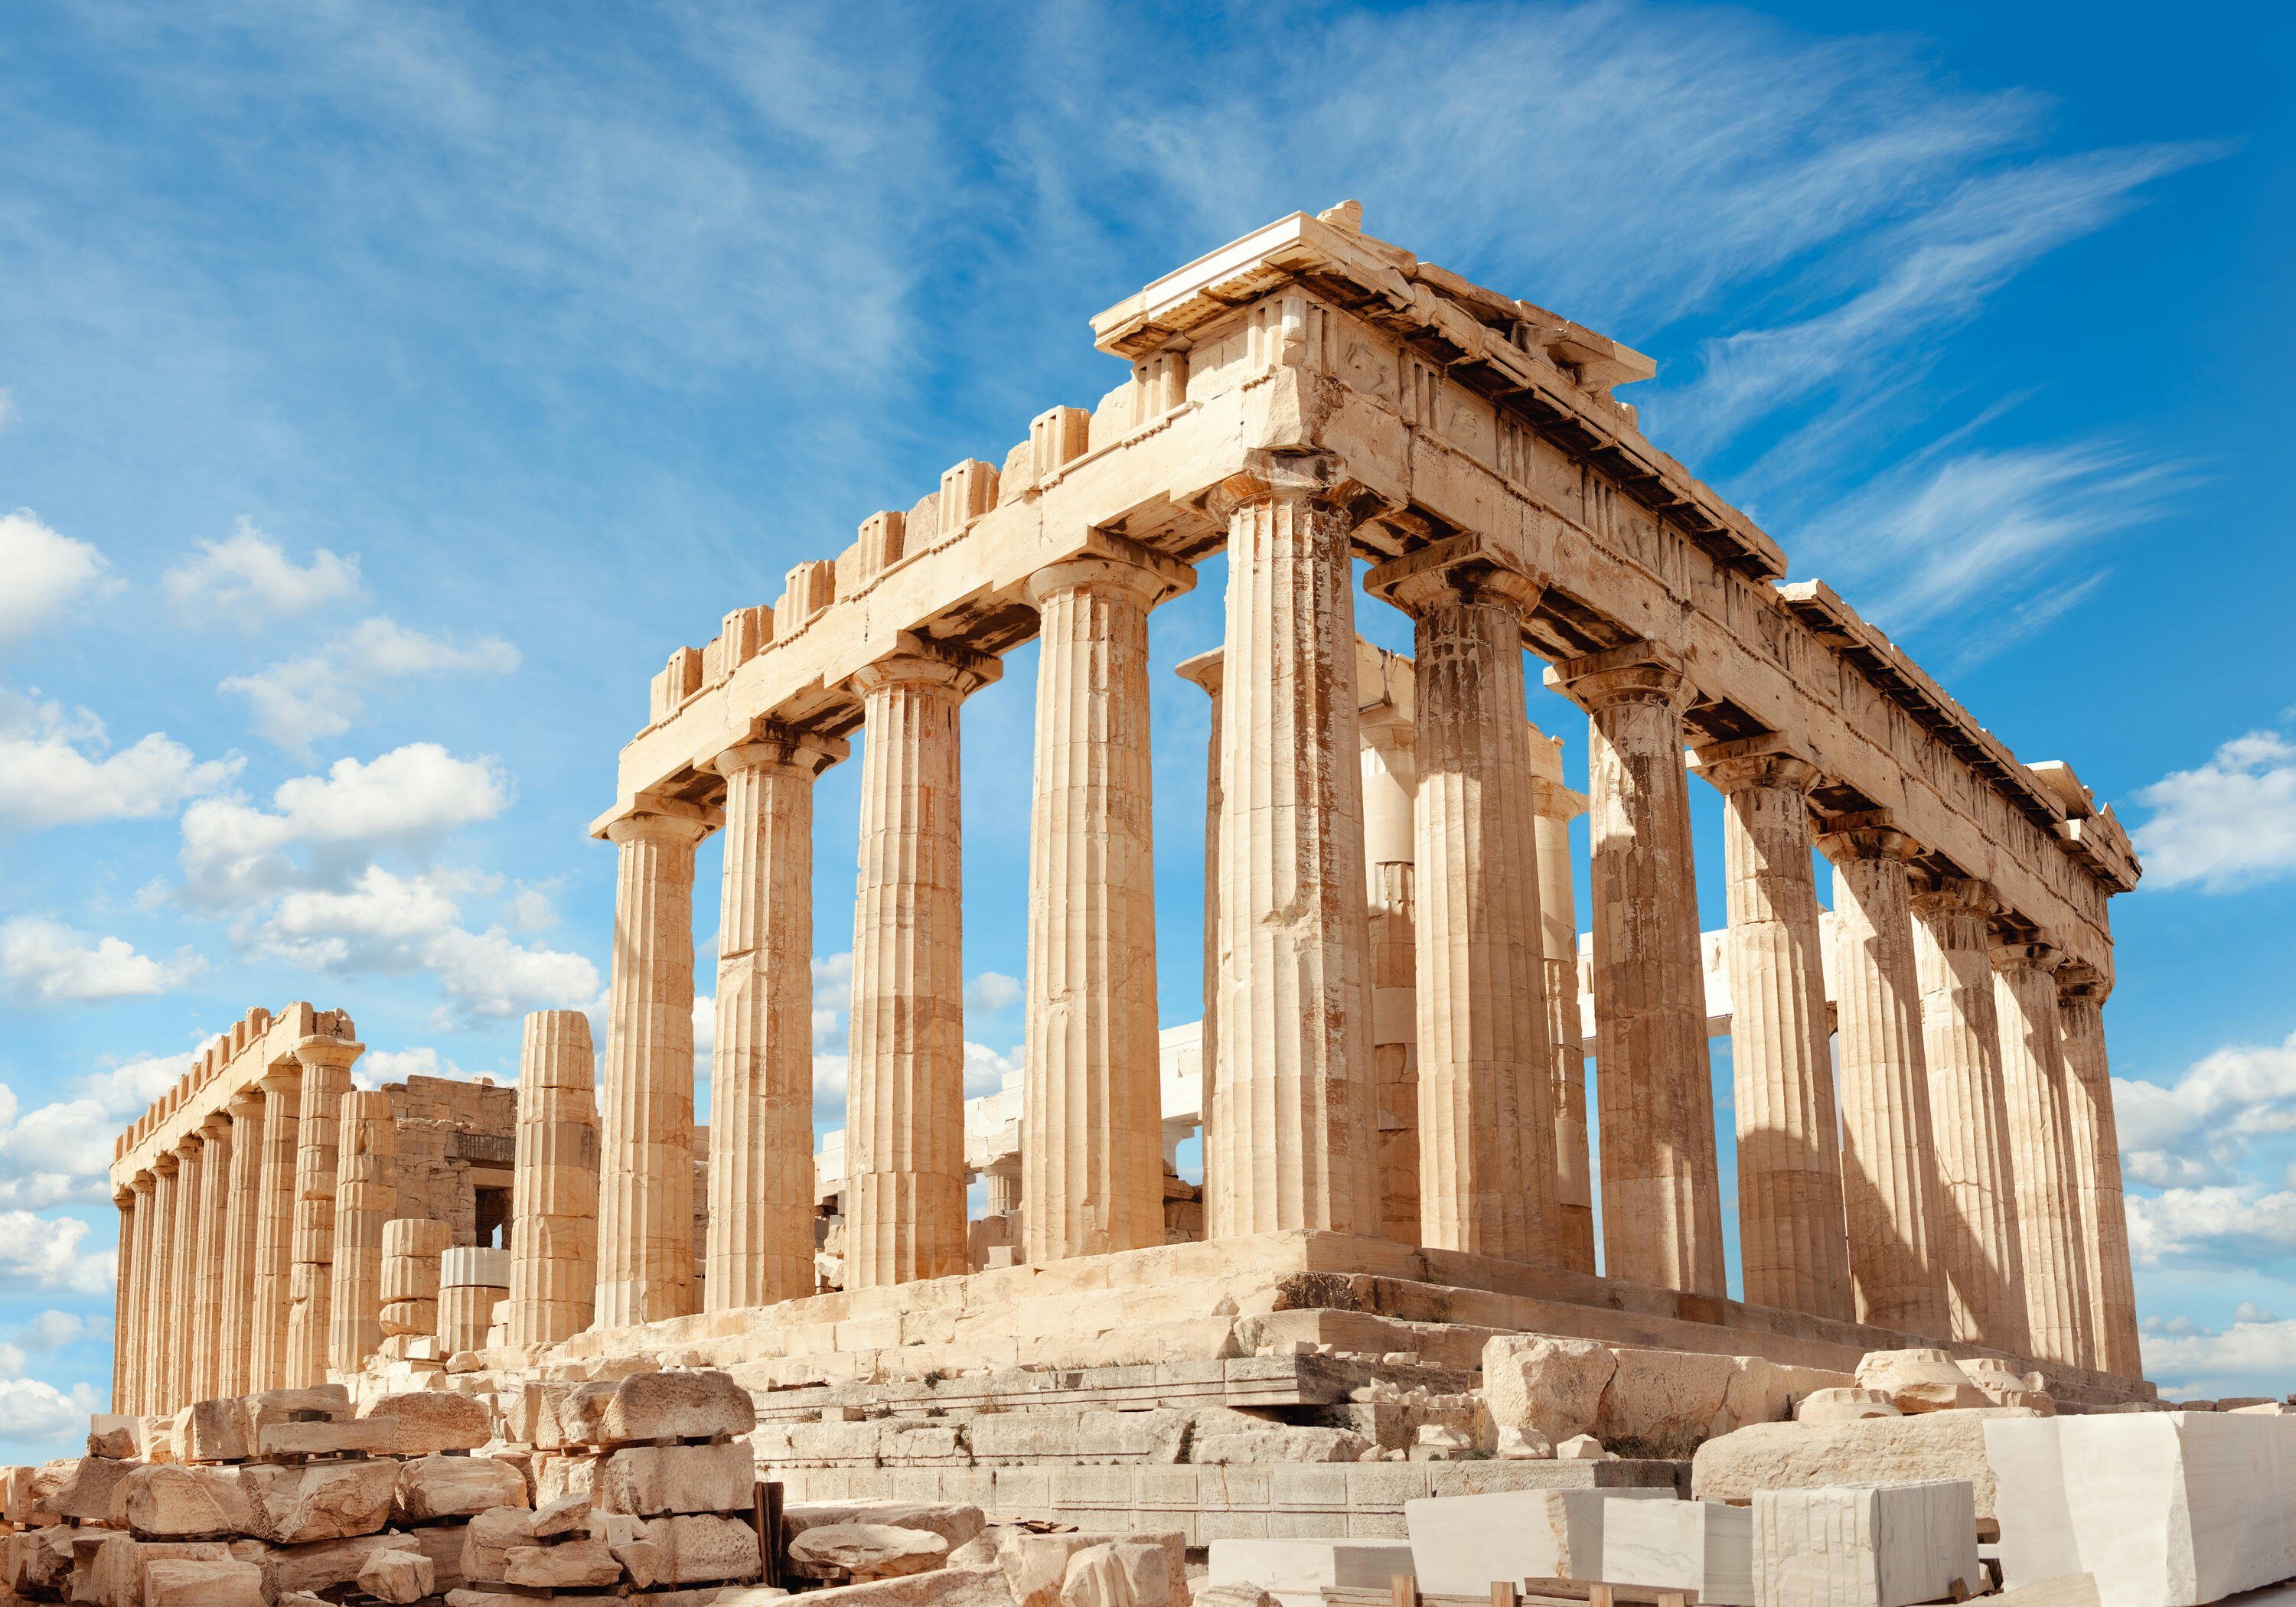 wandmotiv24 Fototapete Griechische Ruine mit blauem Himmel, glatt, Wandtapete, Motivtapete, matt, Vliestapete